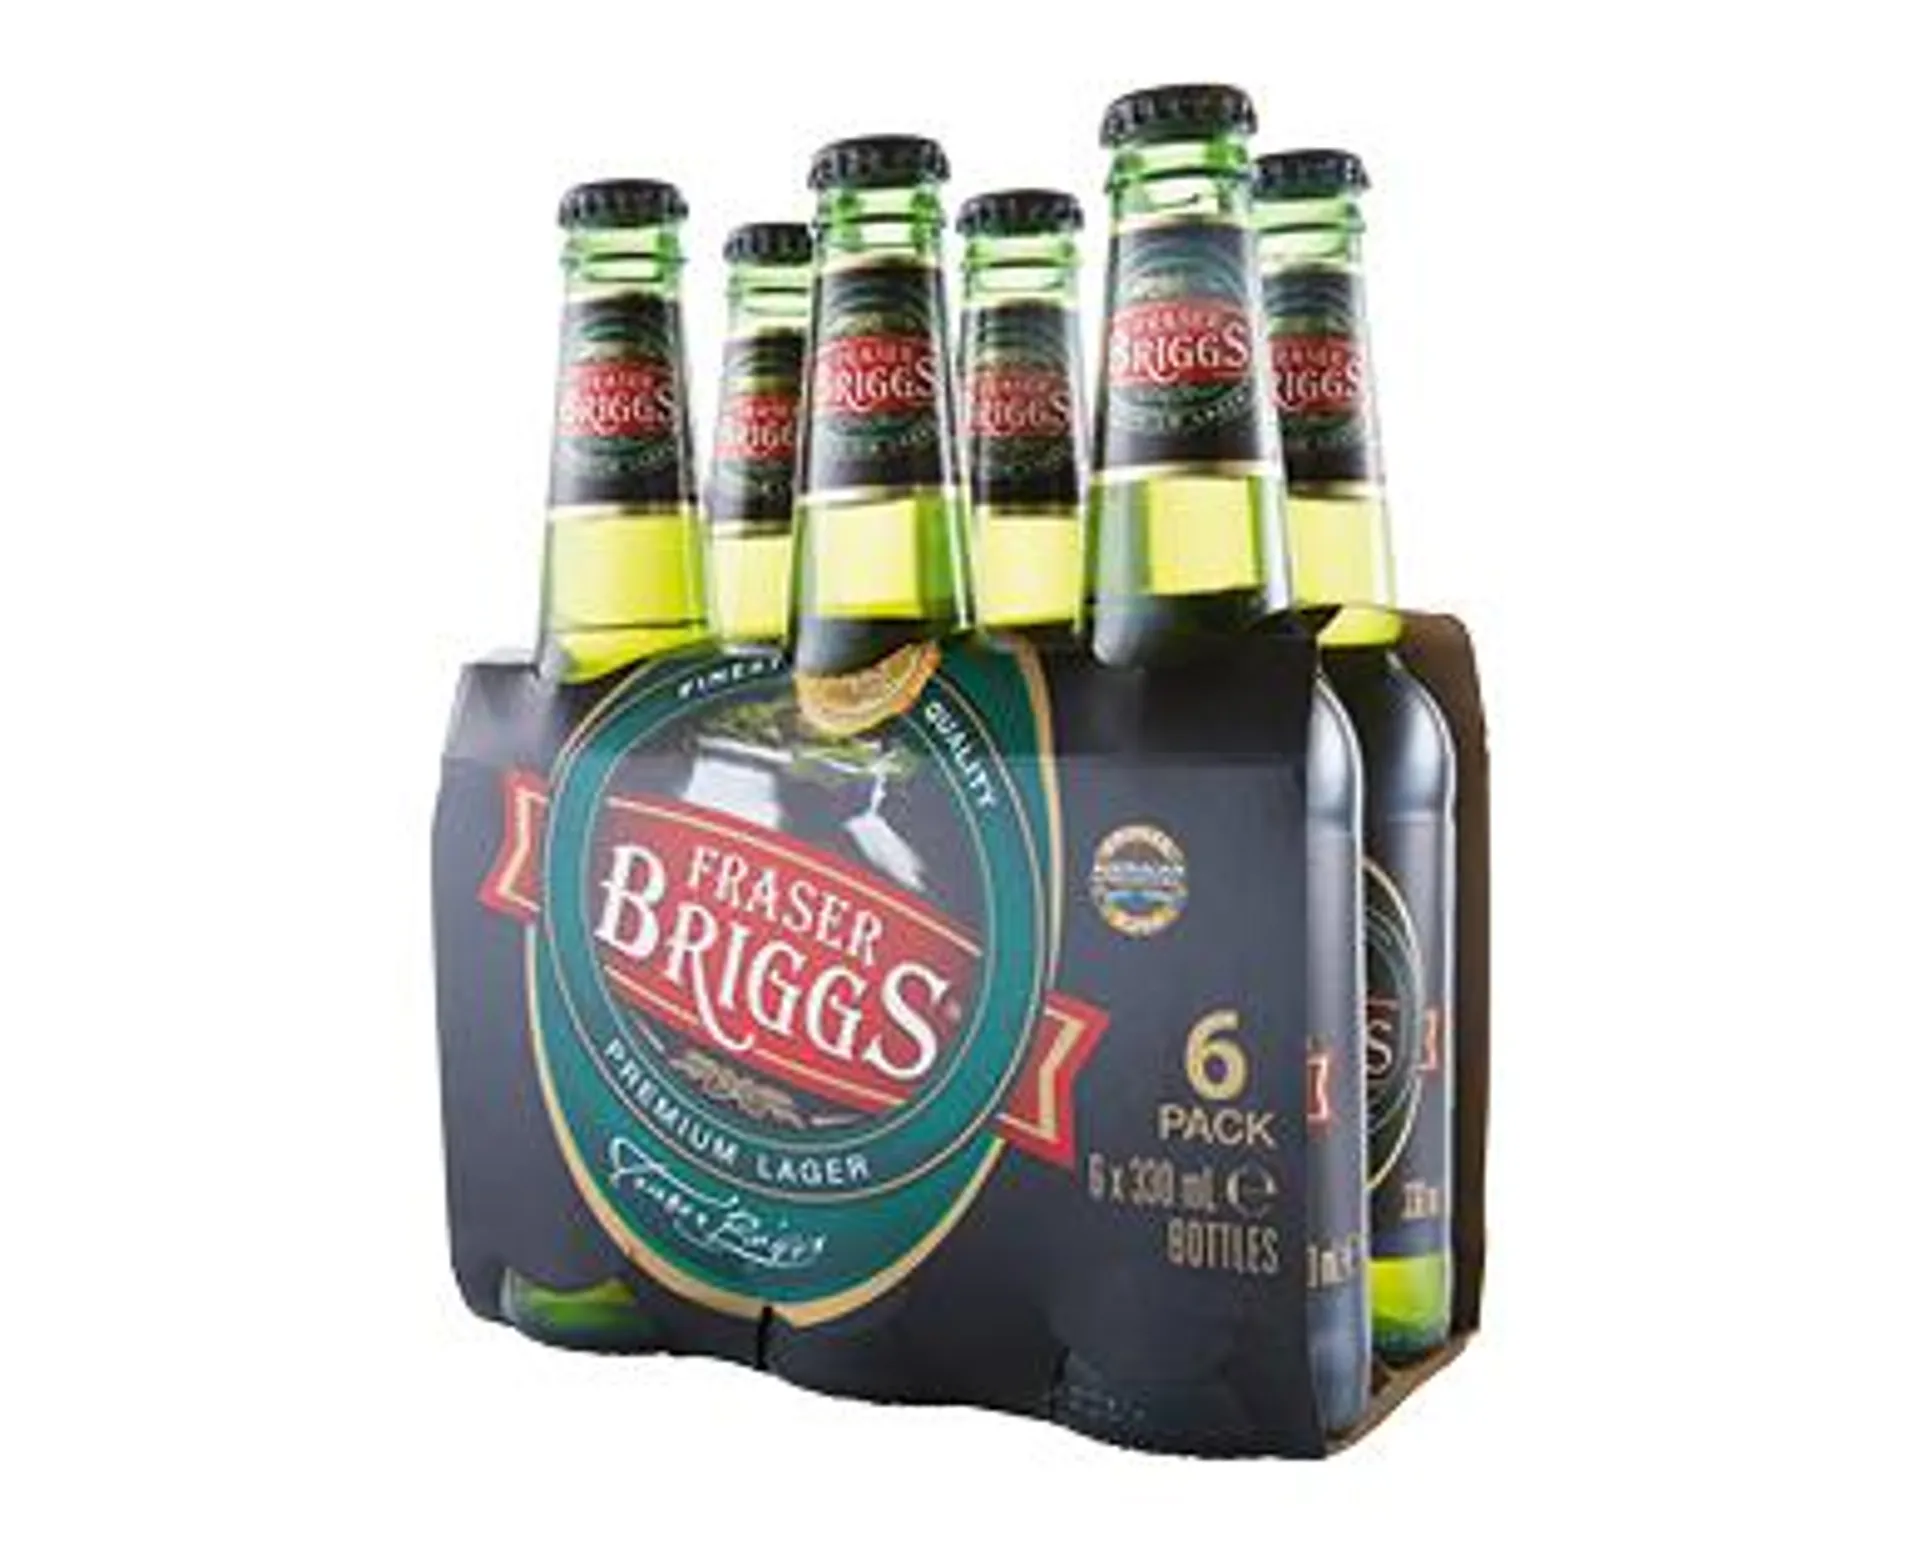 Fraser Briggs Premium Lager 6 x 330ml